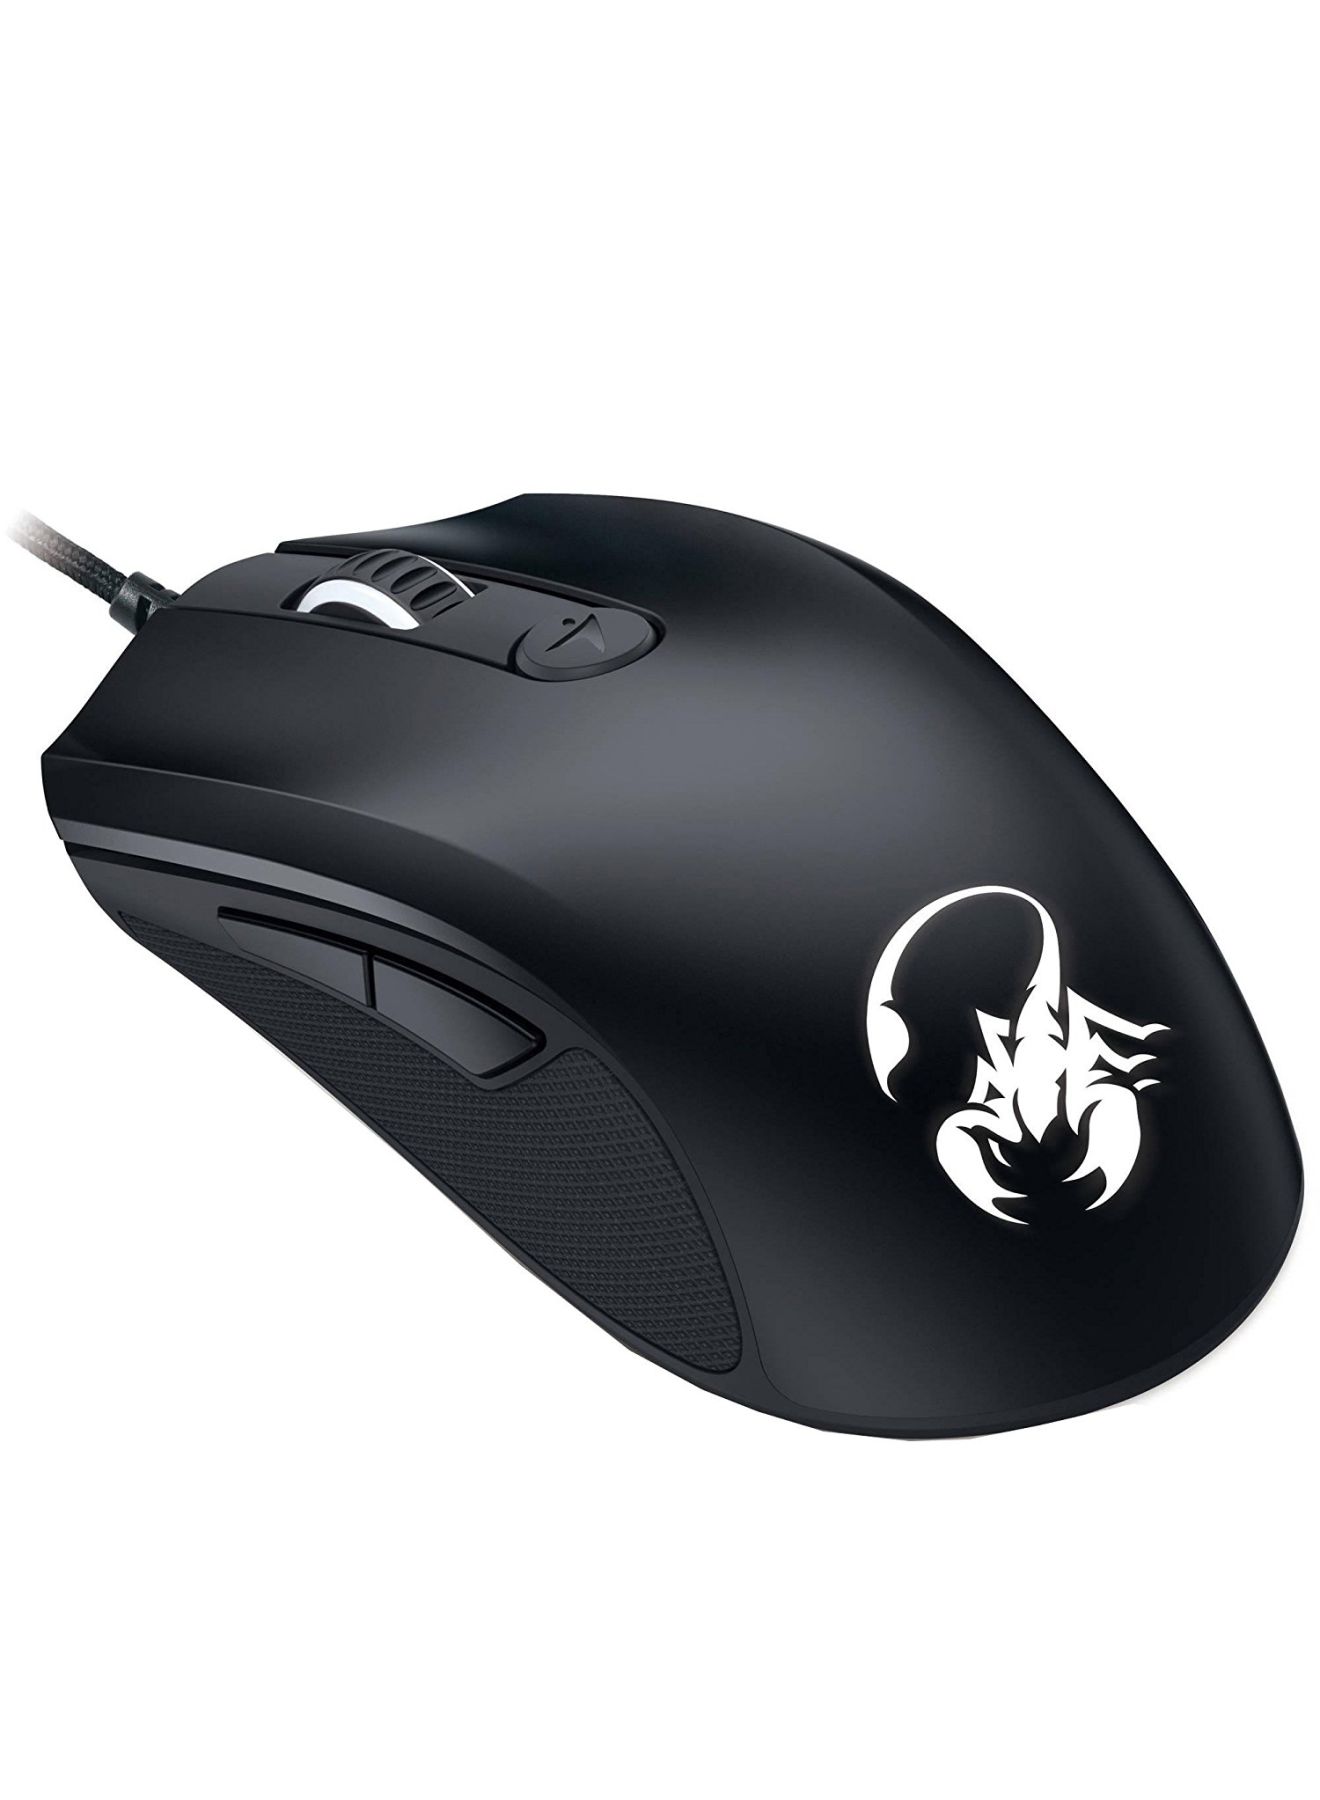 Genius Scorpion Wired Mouse, 8200 Dpi, Black - M8-610